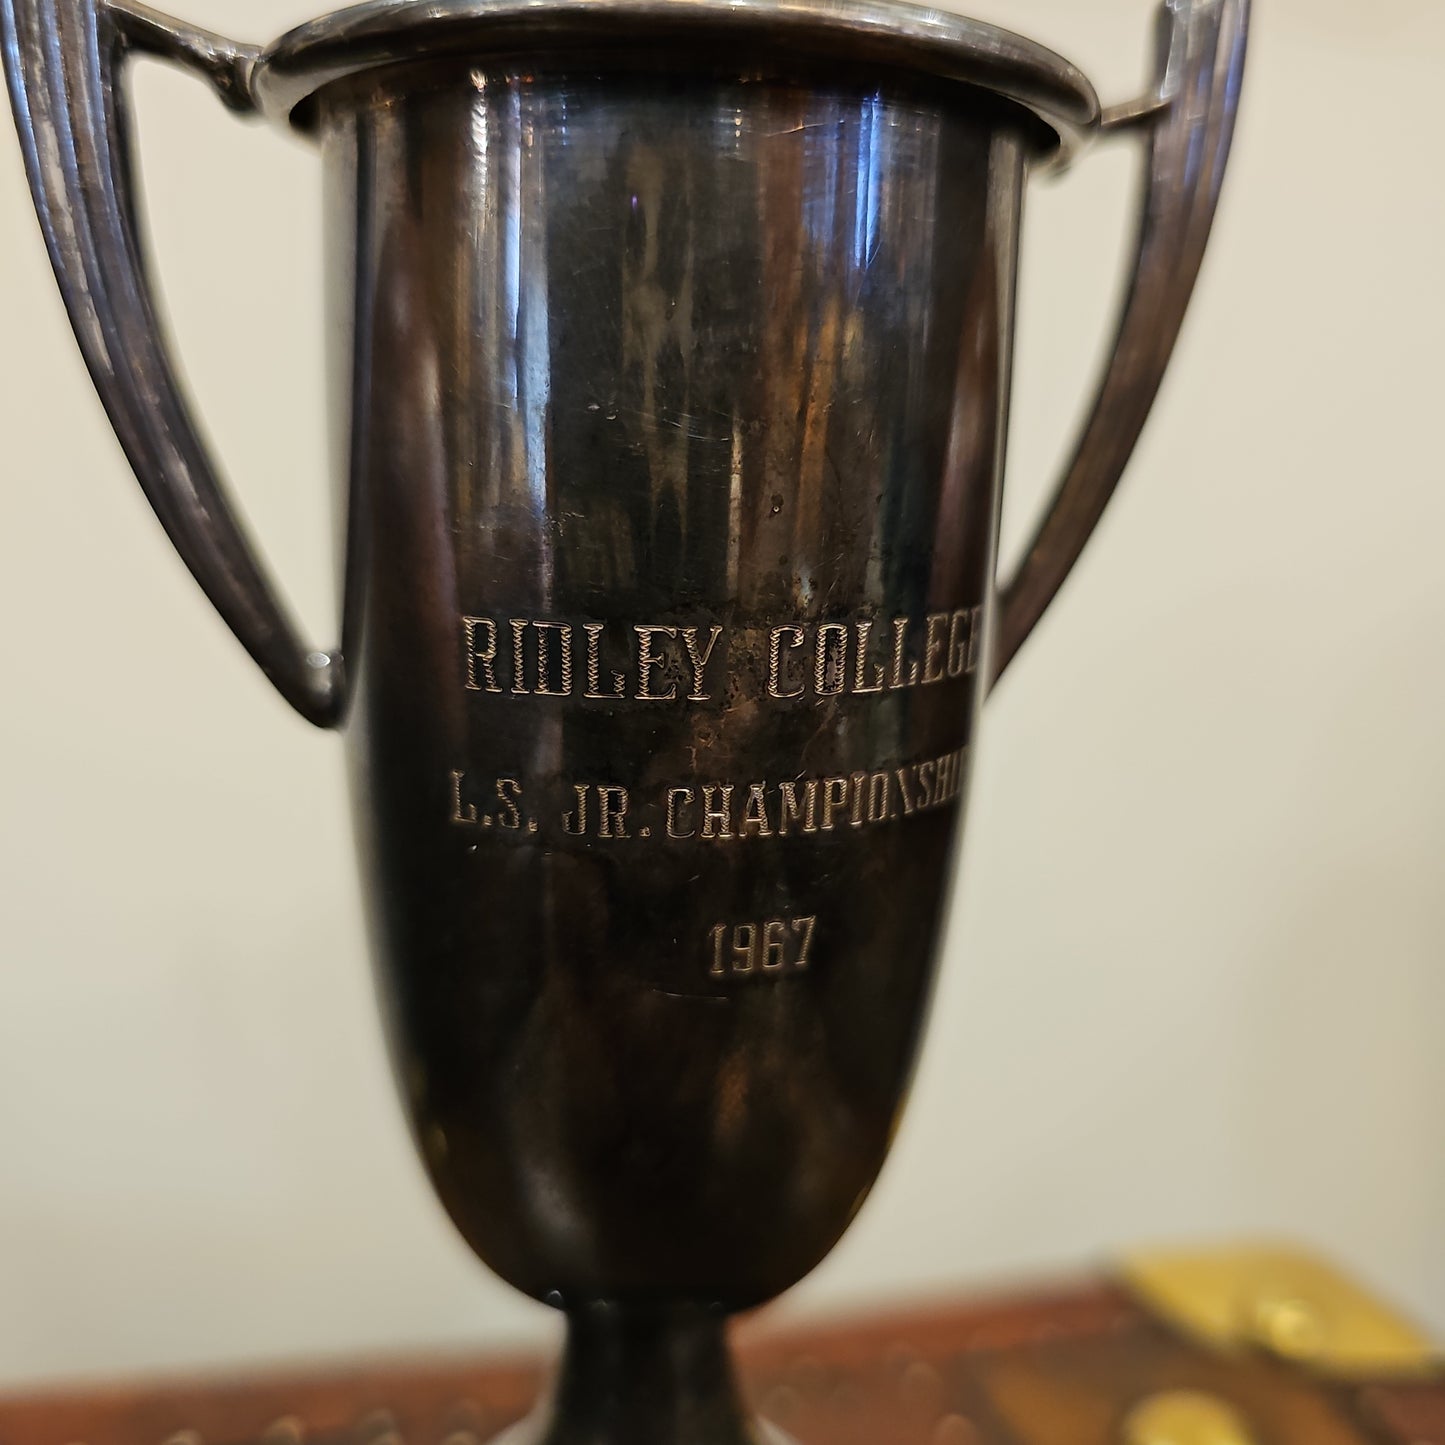 Vintage Trophy, "Ridley College, L.S. Jr. Championship, 1967"